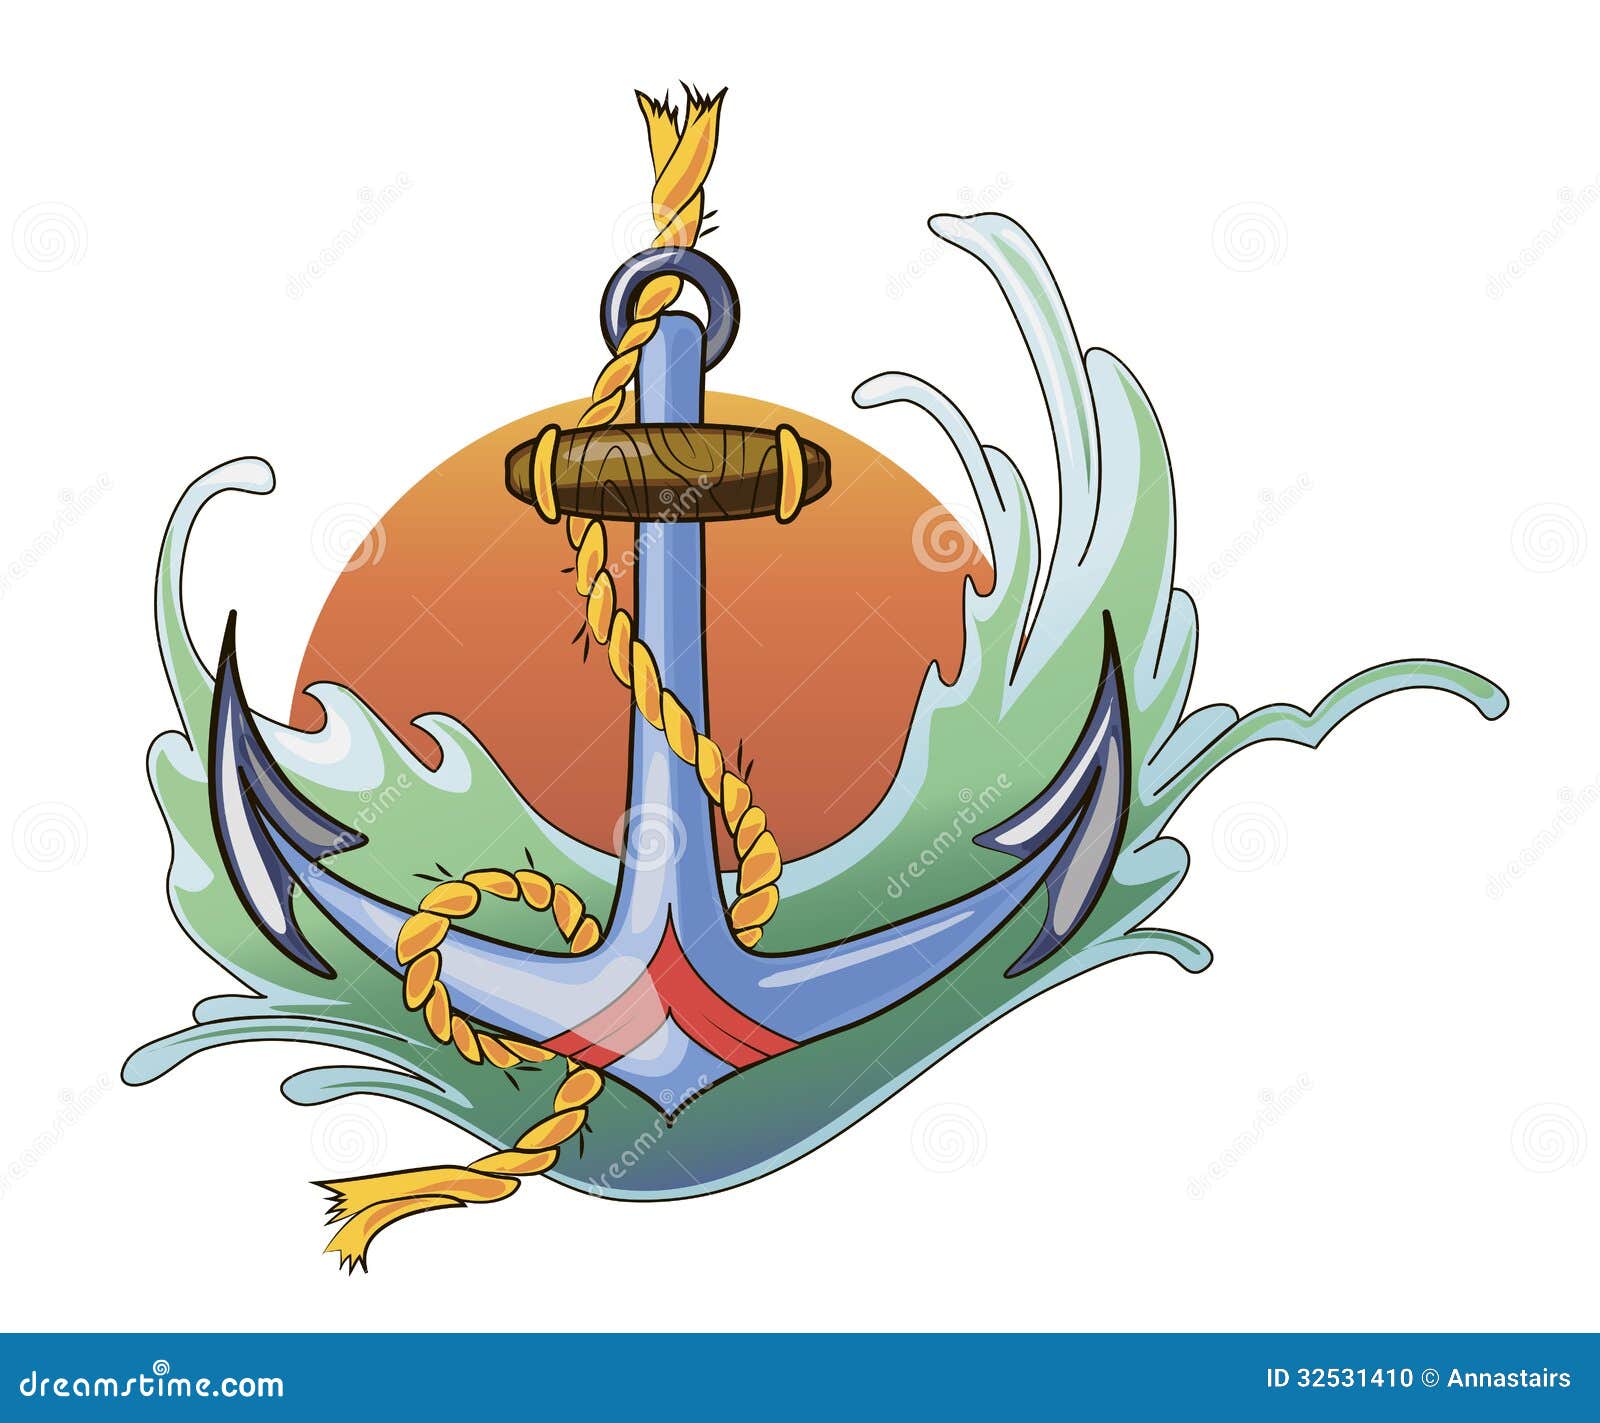 Cartoon anchor stock vector. Illustration of travel, cruise - 32531410